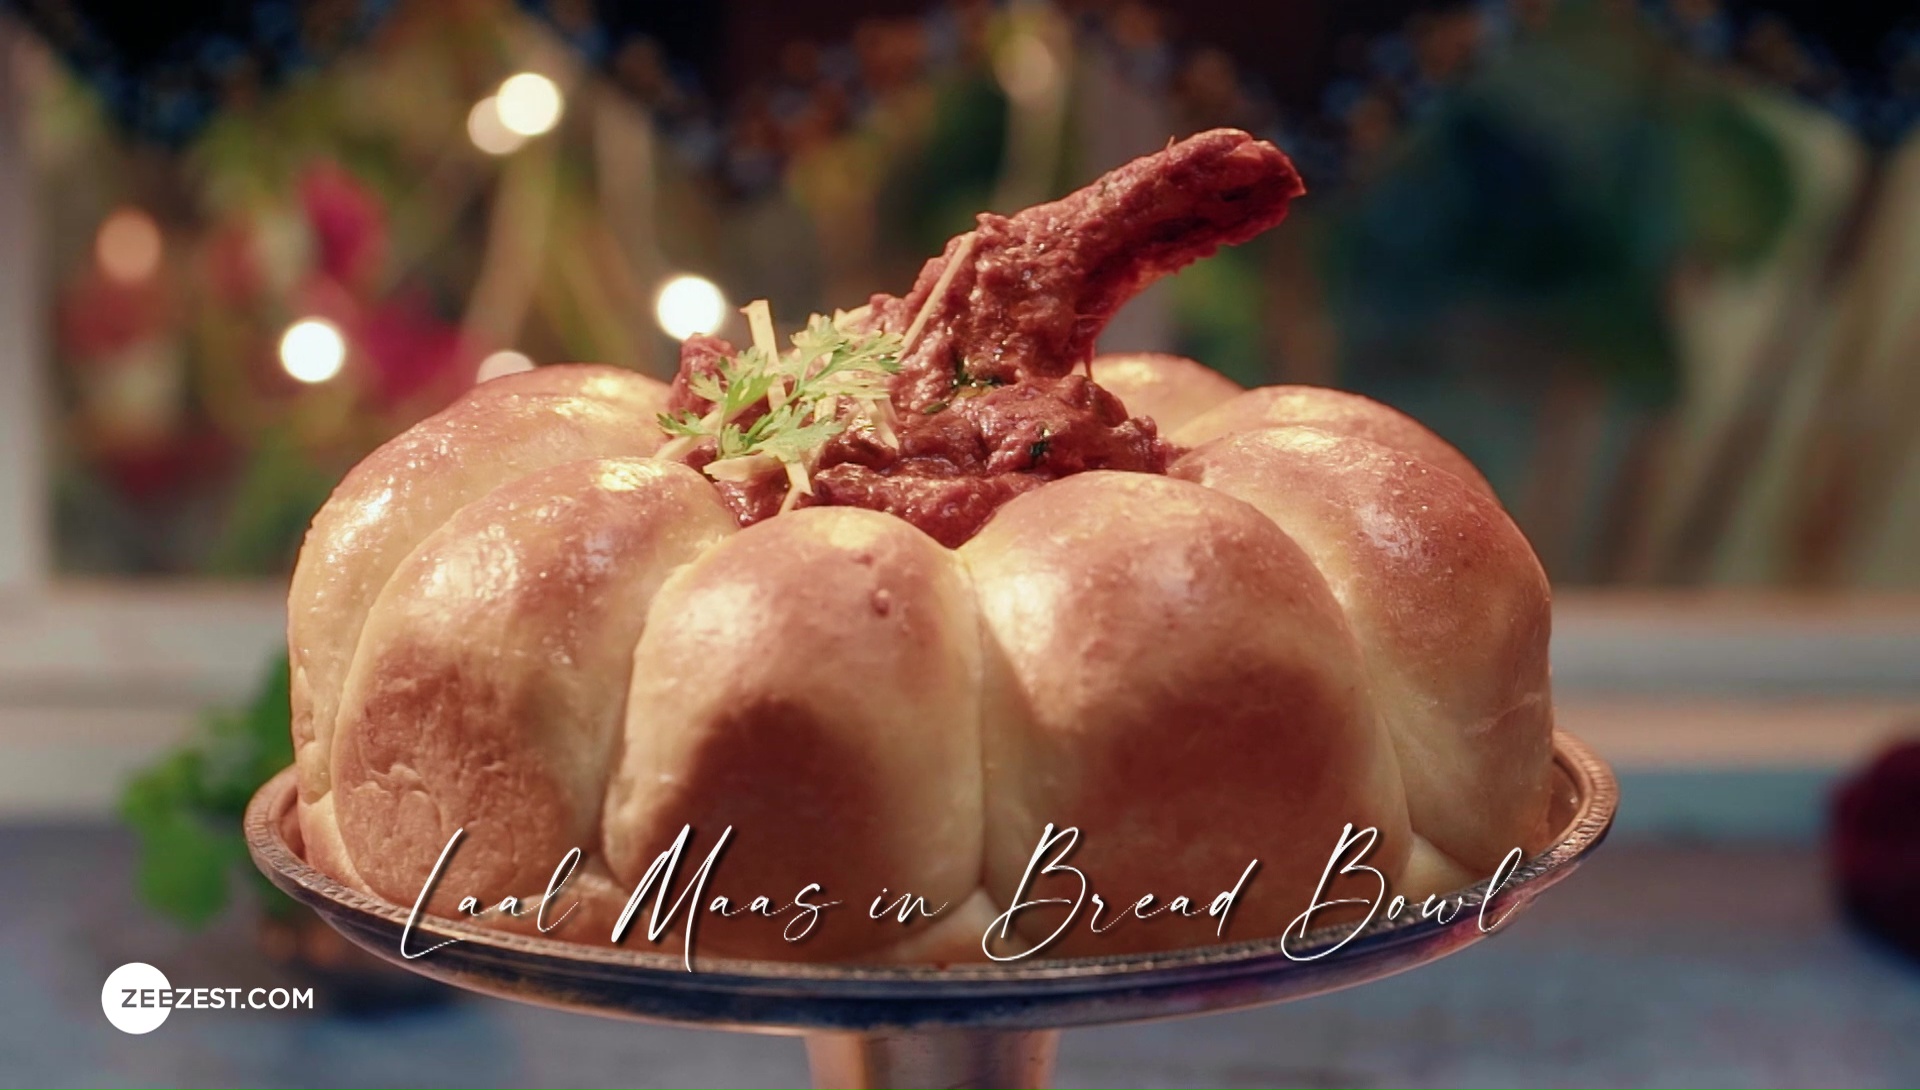 Laal Maas in Bread Bowl